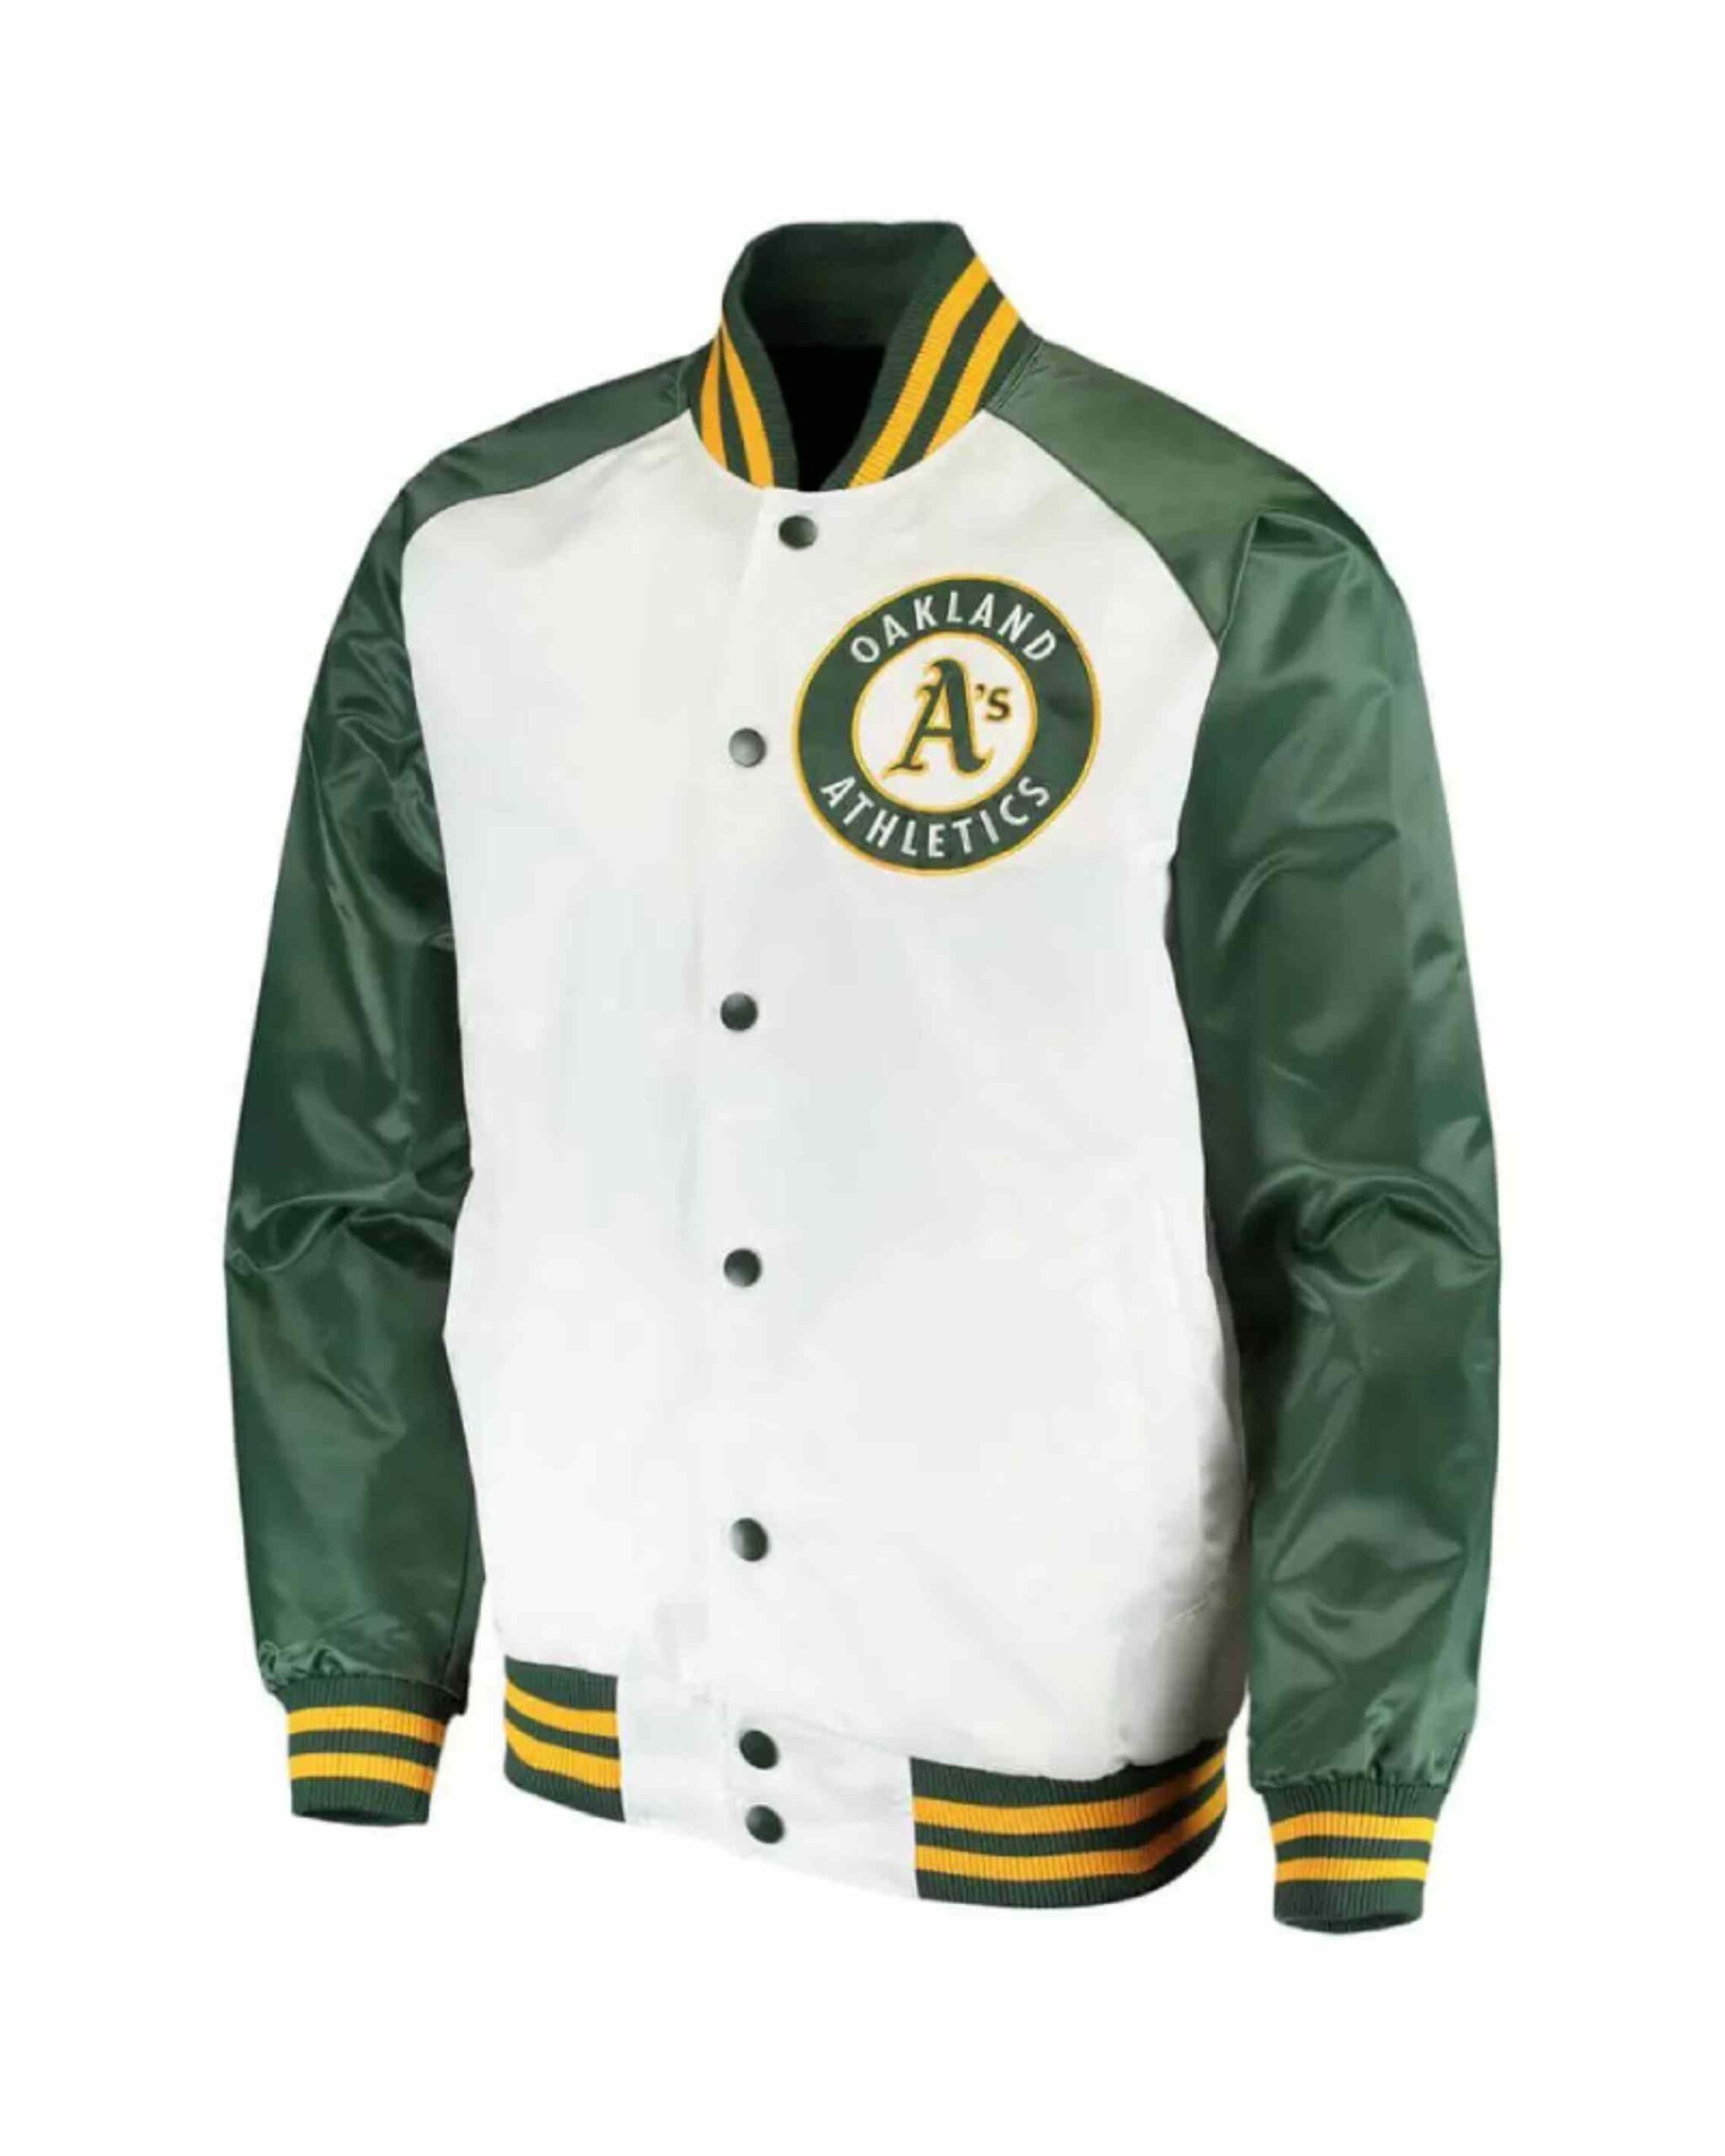 MLB Oakland Athletics White And Green Jacket